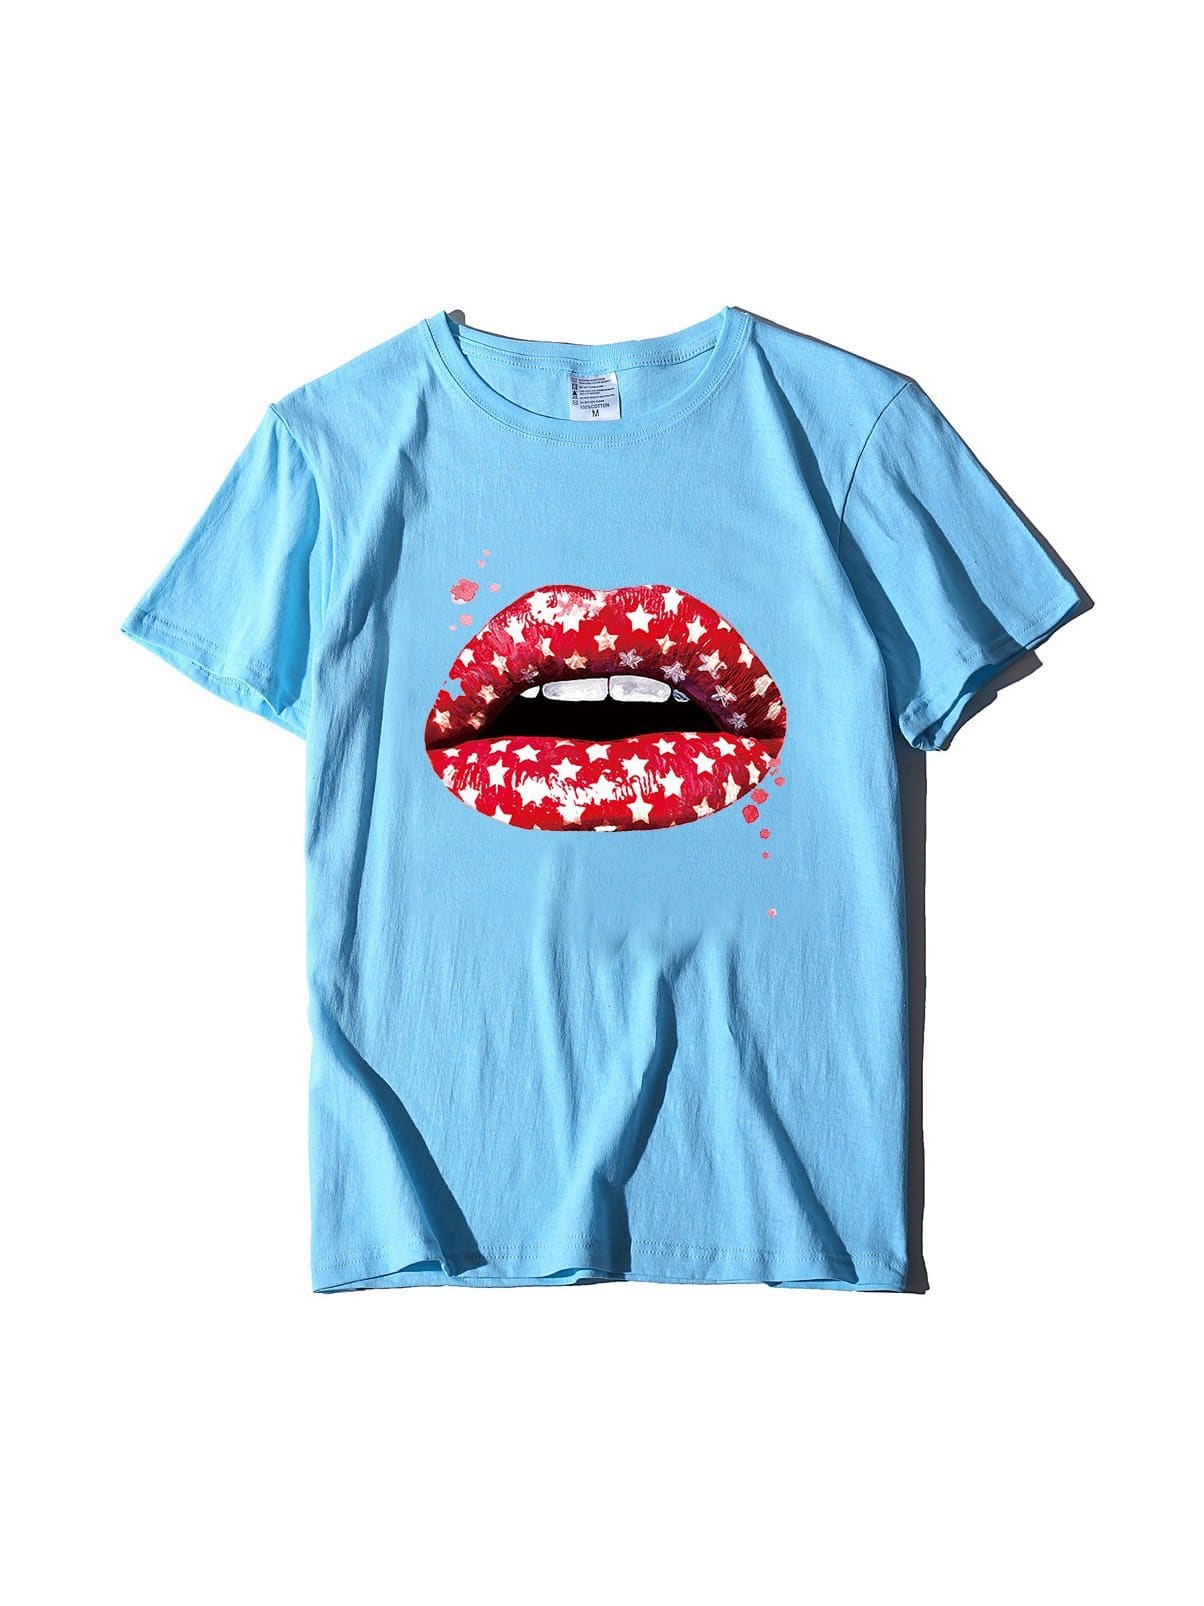 lovevop Lips Printed Casual Fashion Women T-Shirt